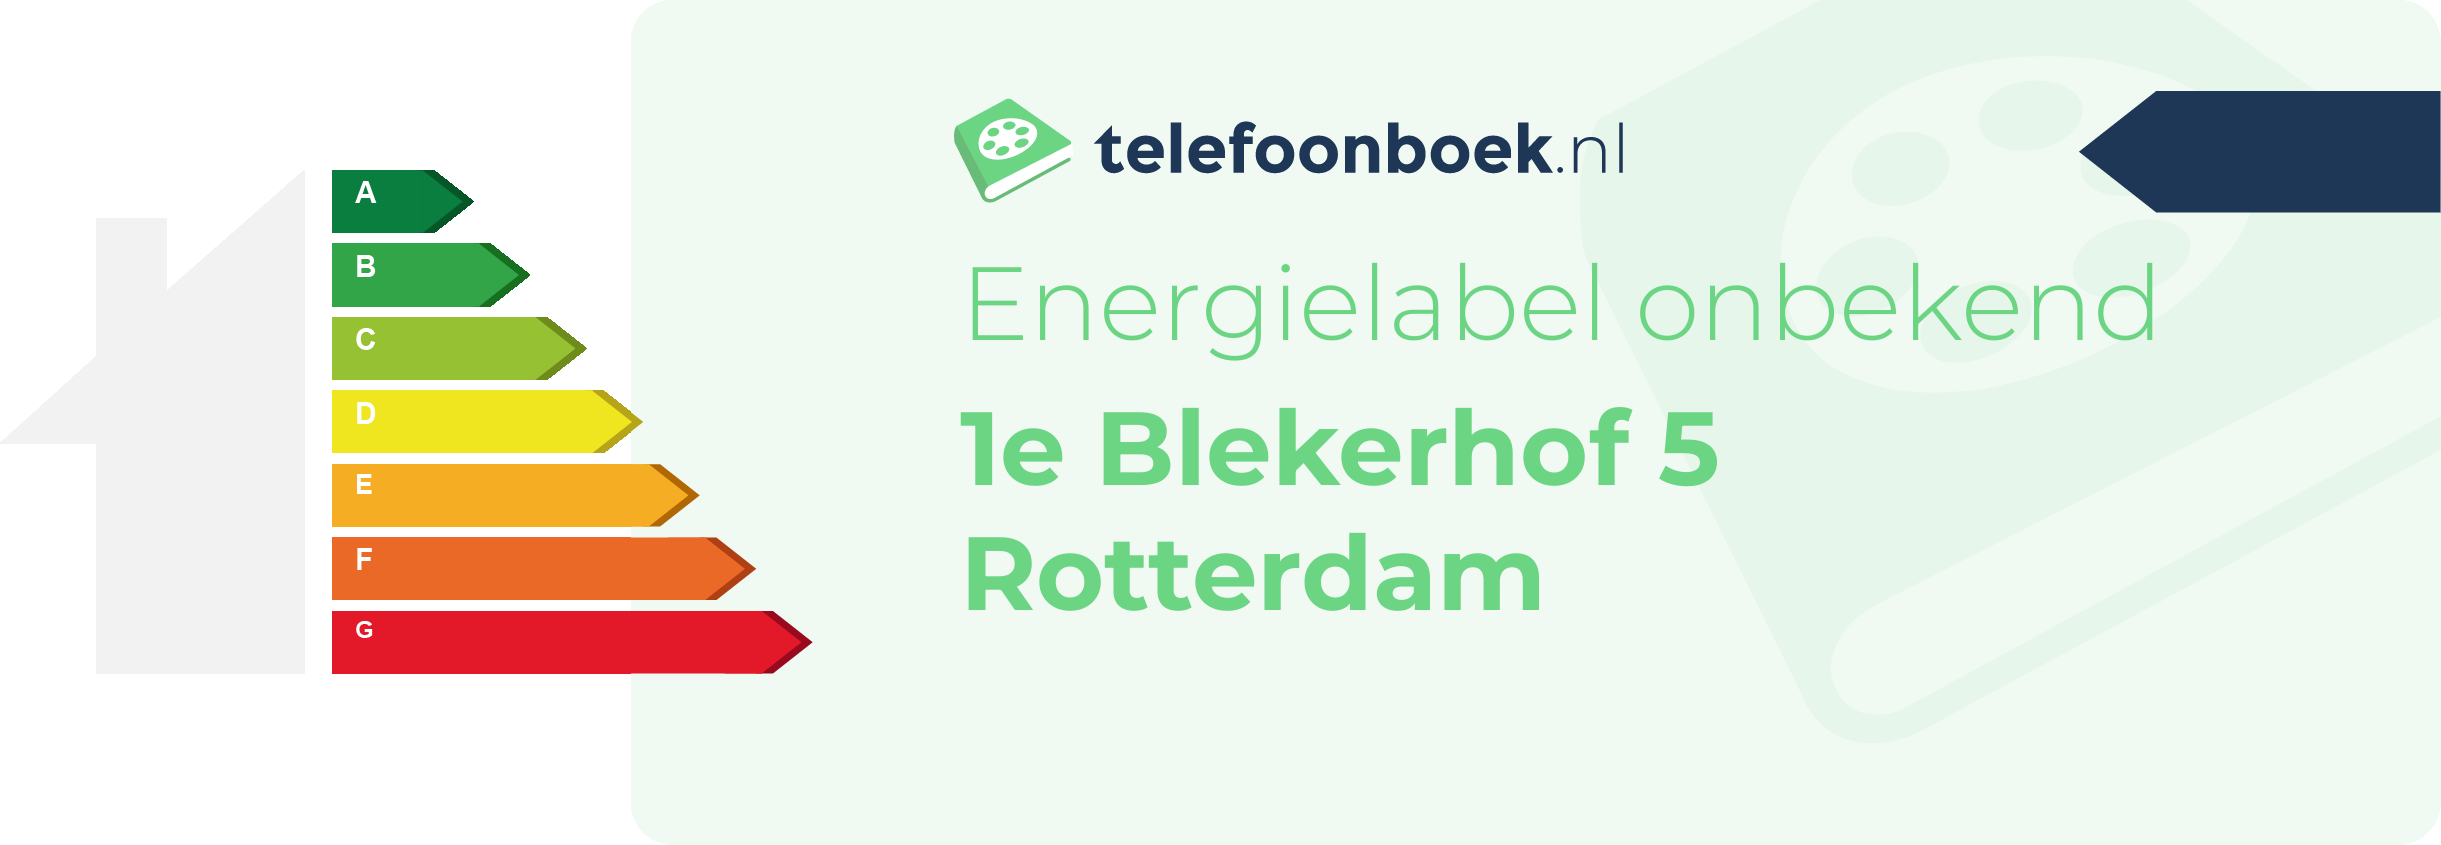 Energielabel 1e Blekerhof 5 Rotterdam